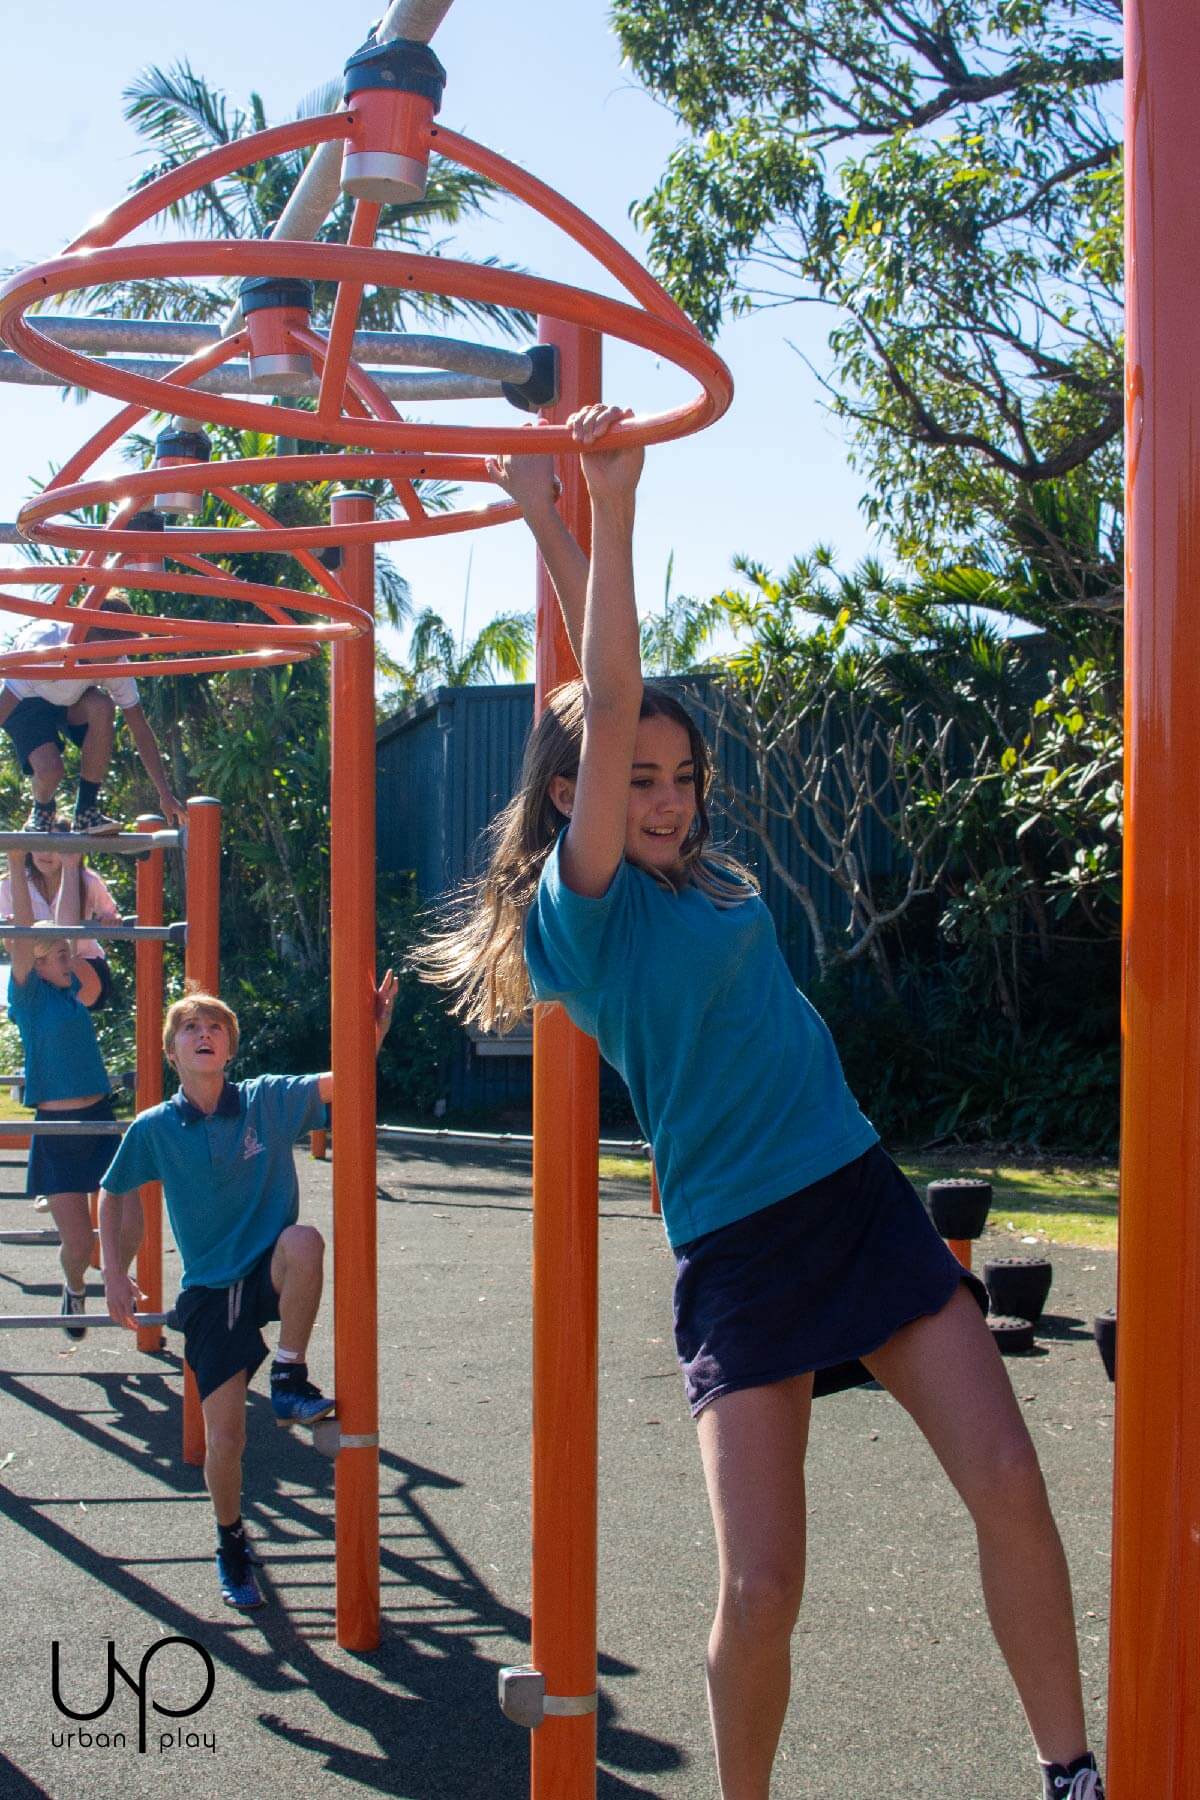 School Playground Upgrades and Funding